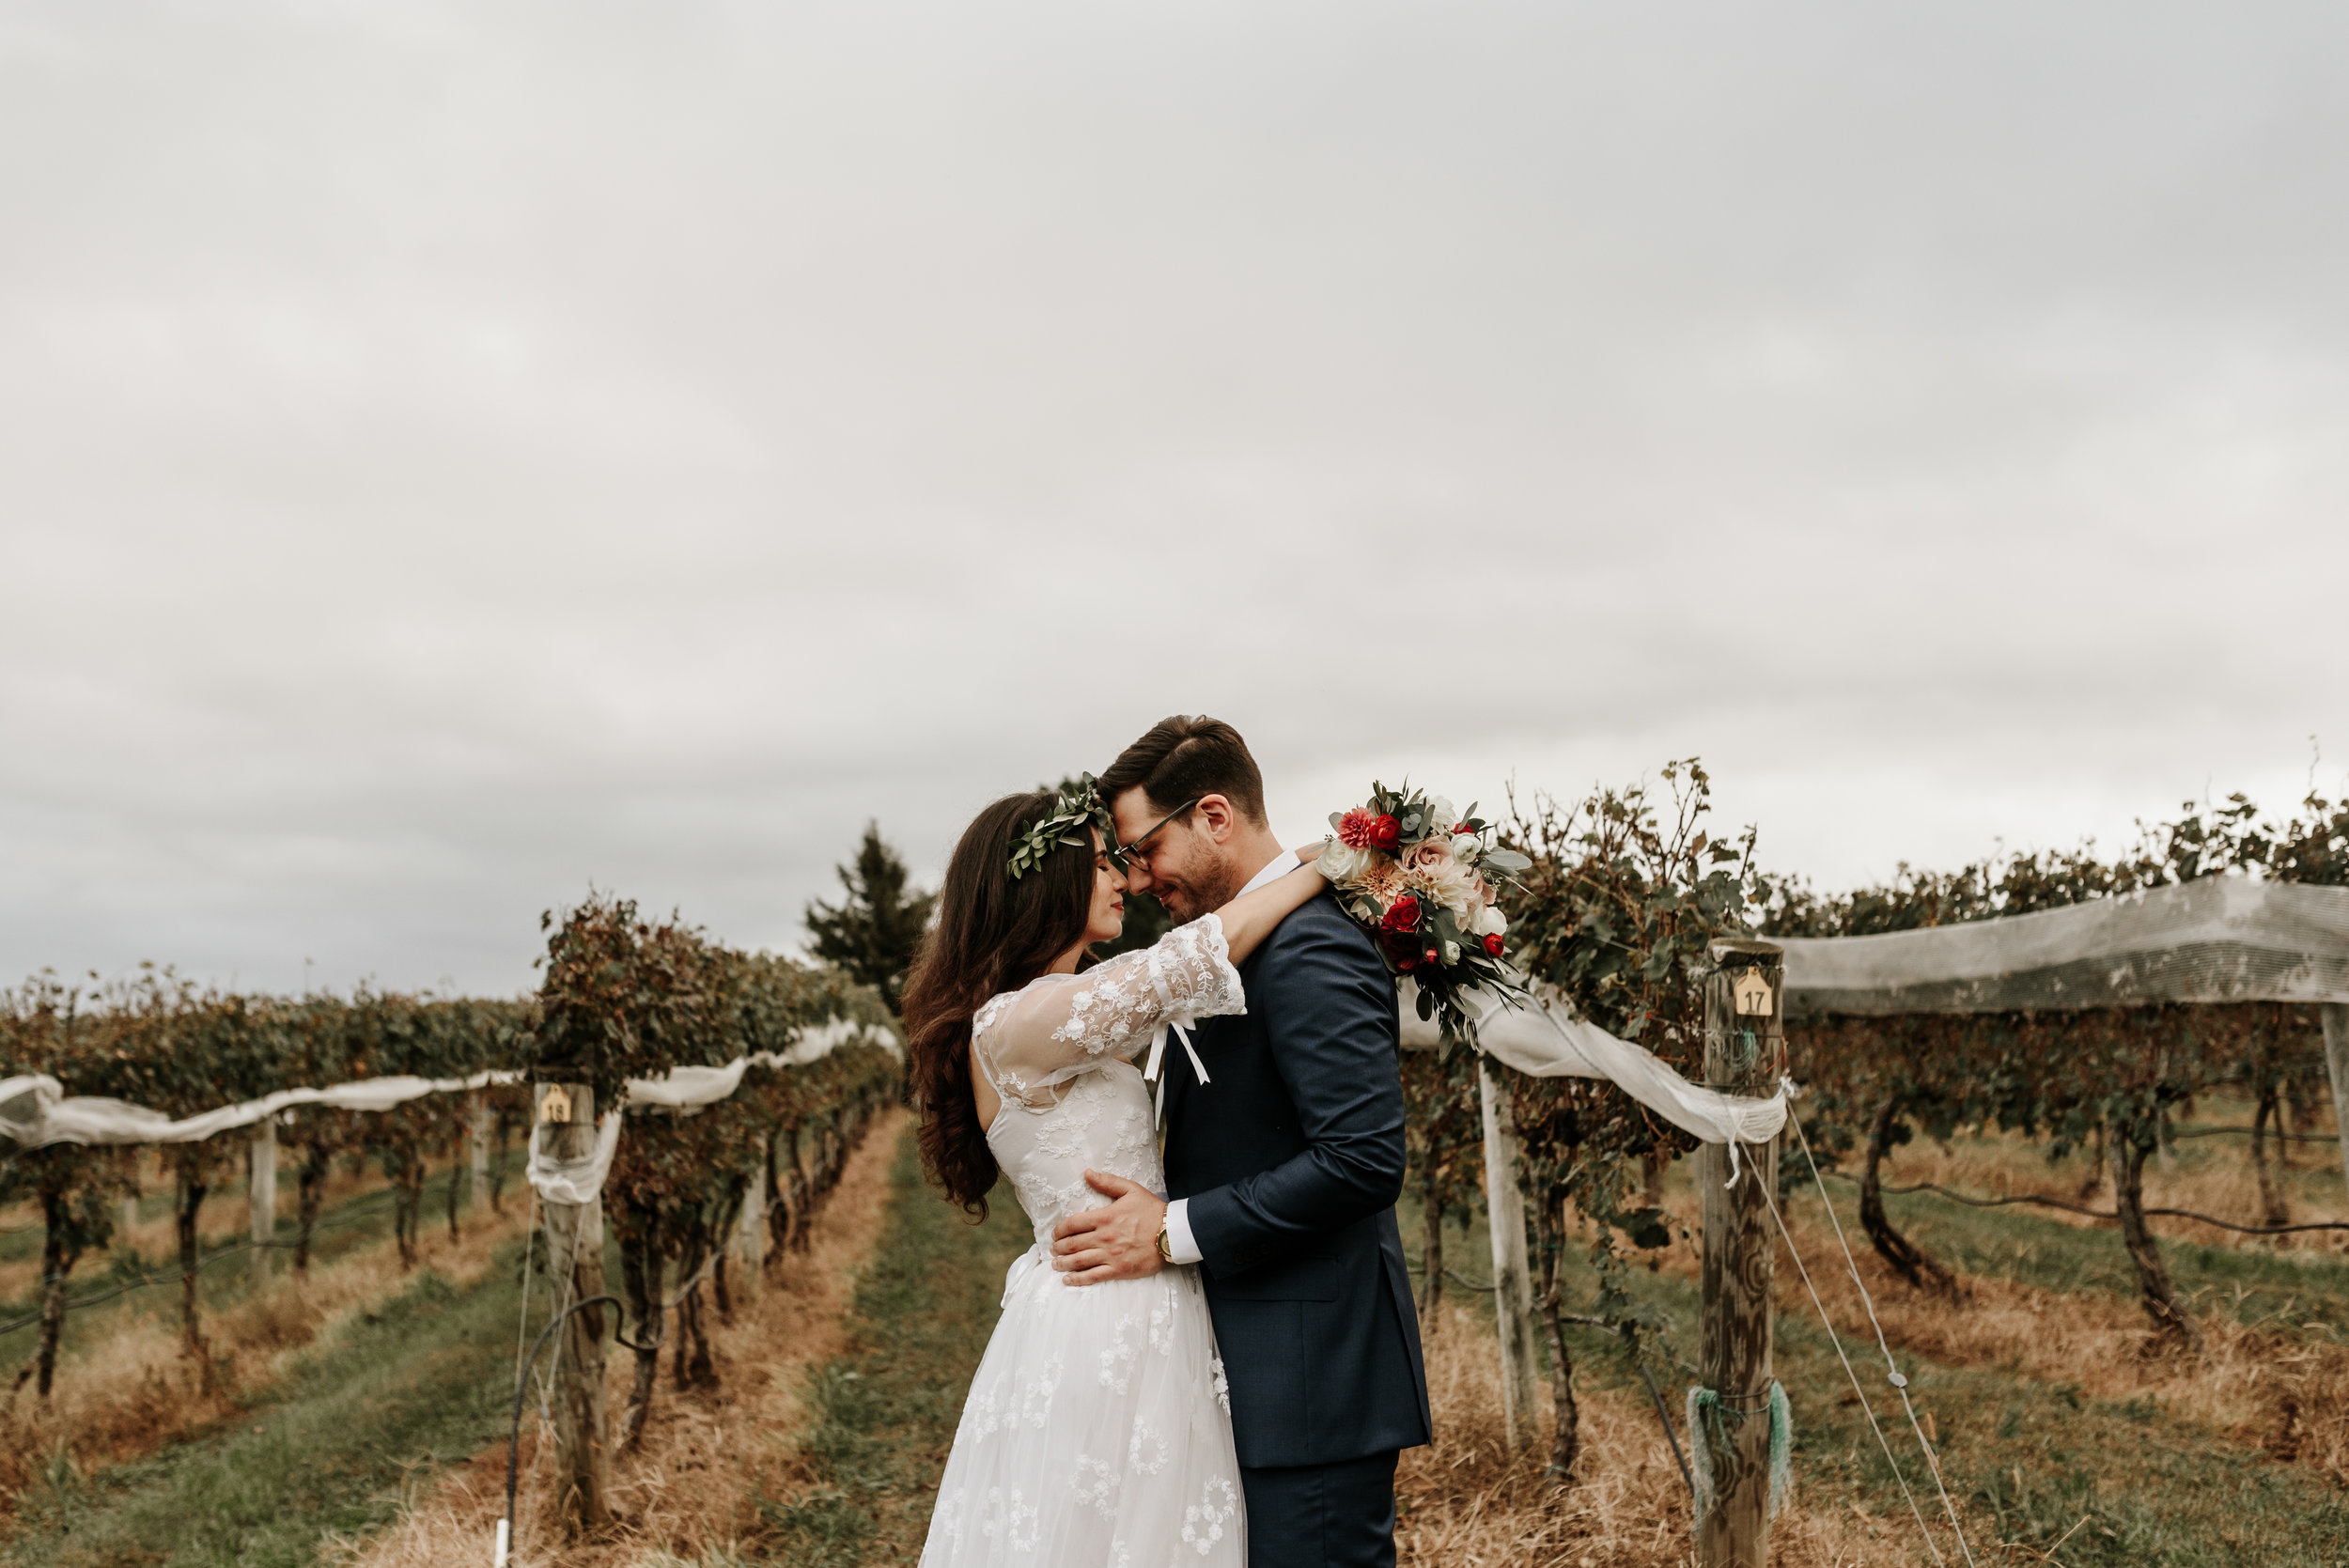 Veritas-Vineyards-and-Winery-Wedding-Photography-Afton-Virginia-Yasmin-Seth-Photography-by-V-9532.jpg